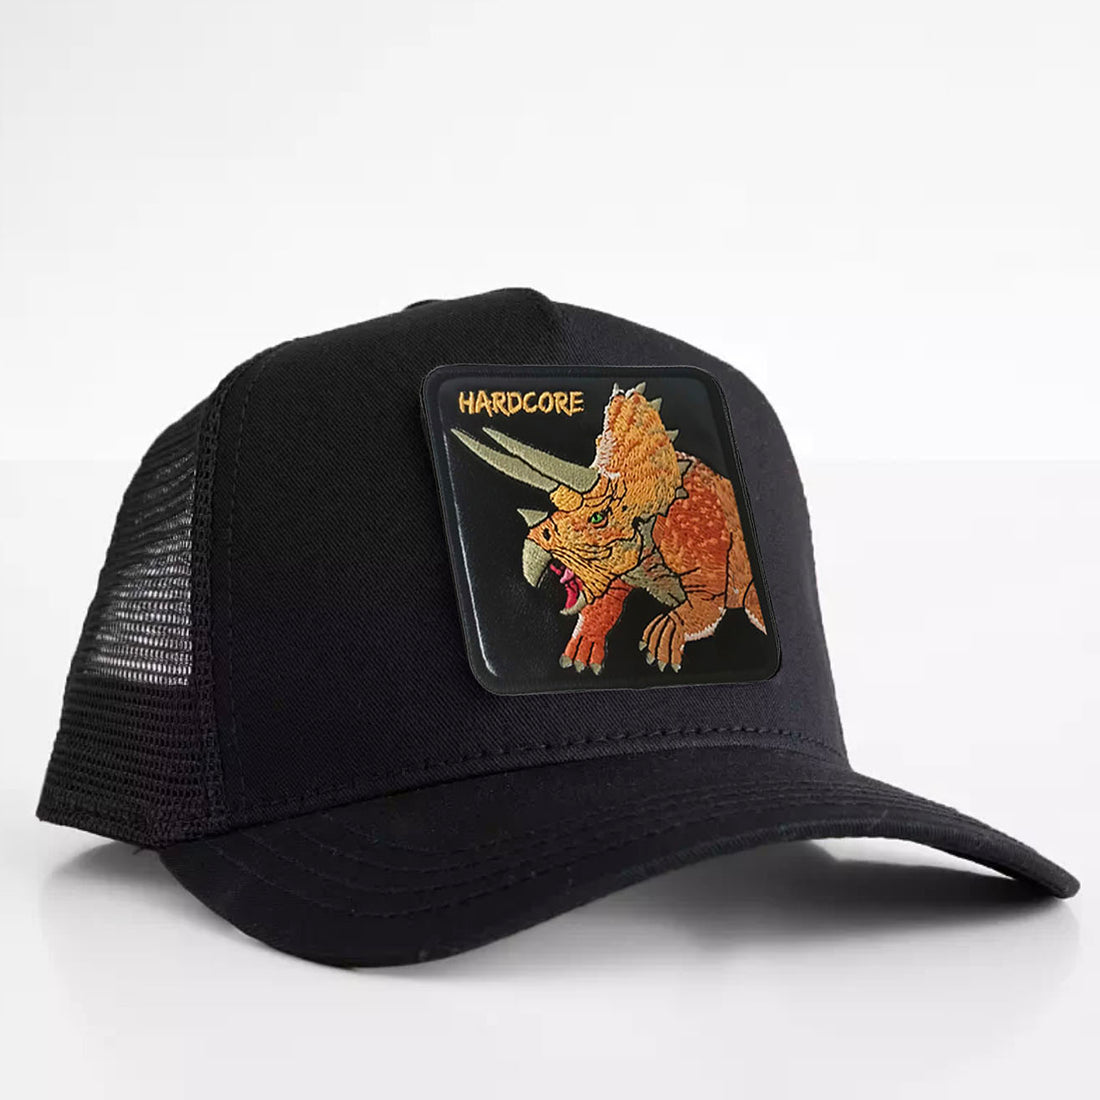 Triceratops - "Hardcore" Trucker Hat